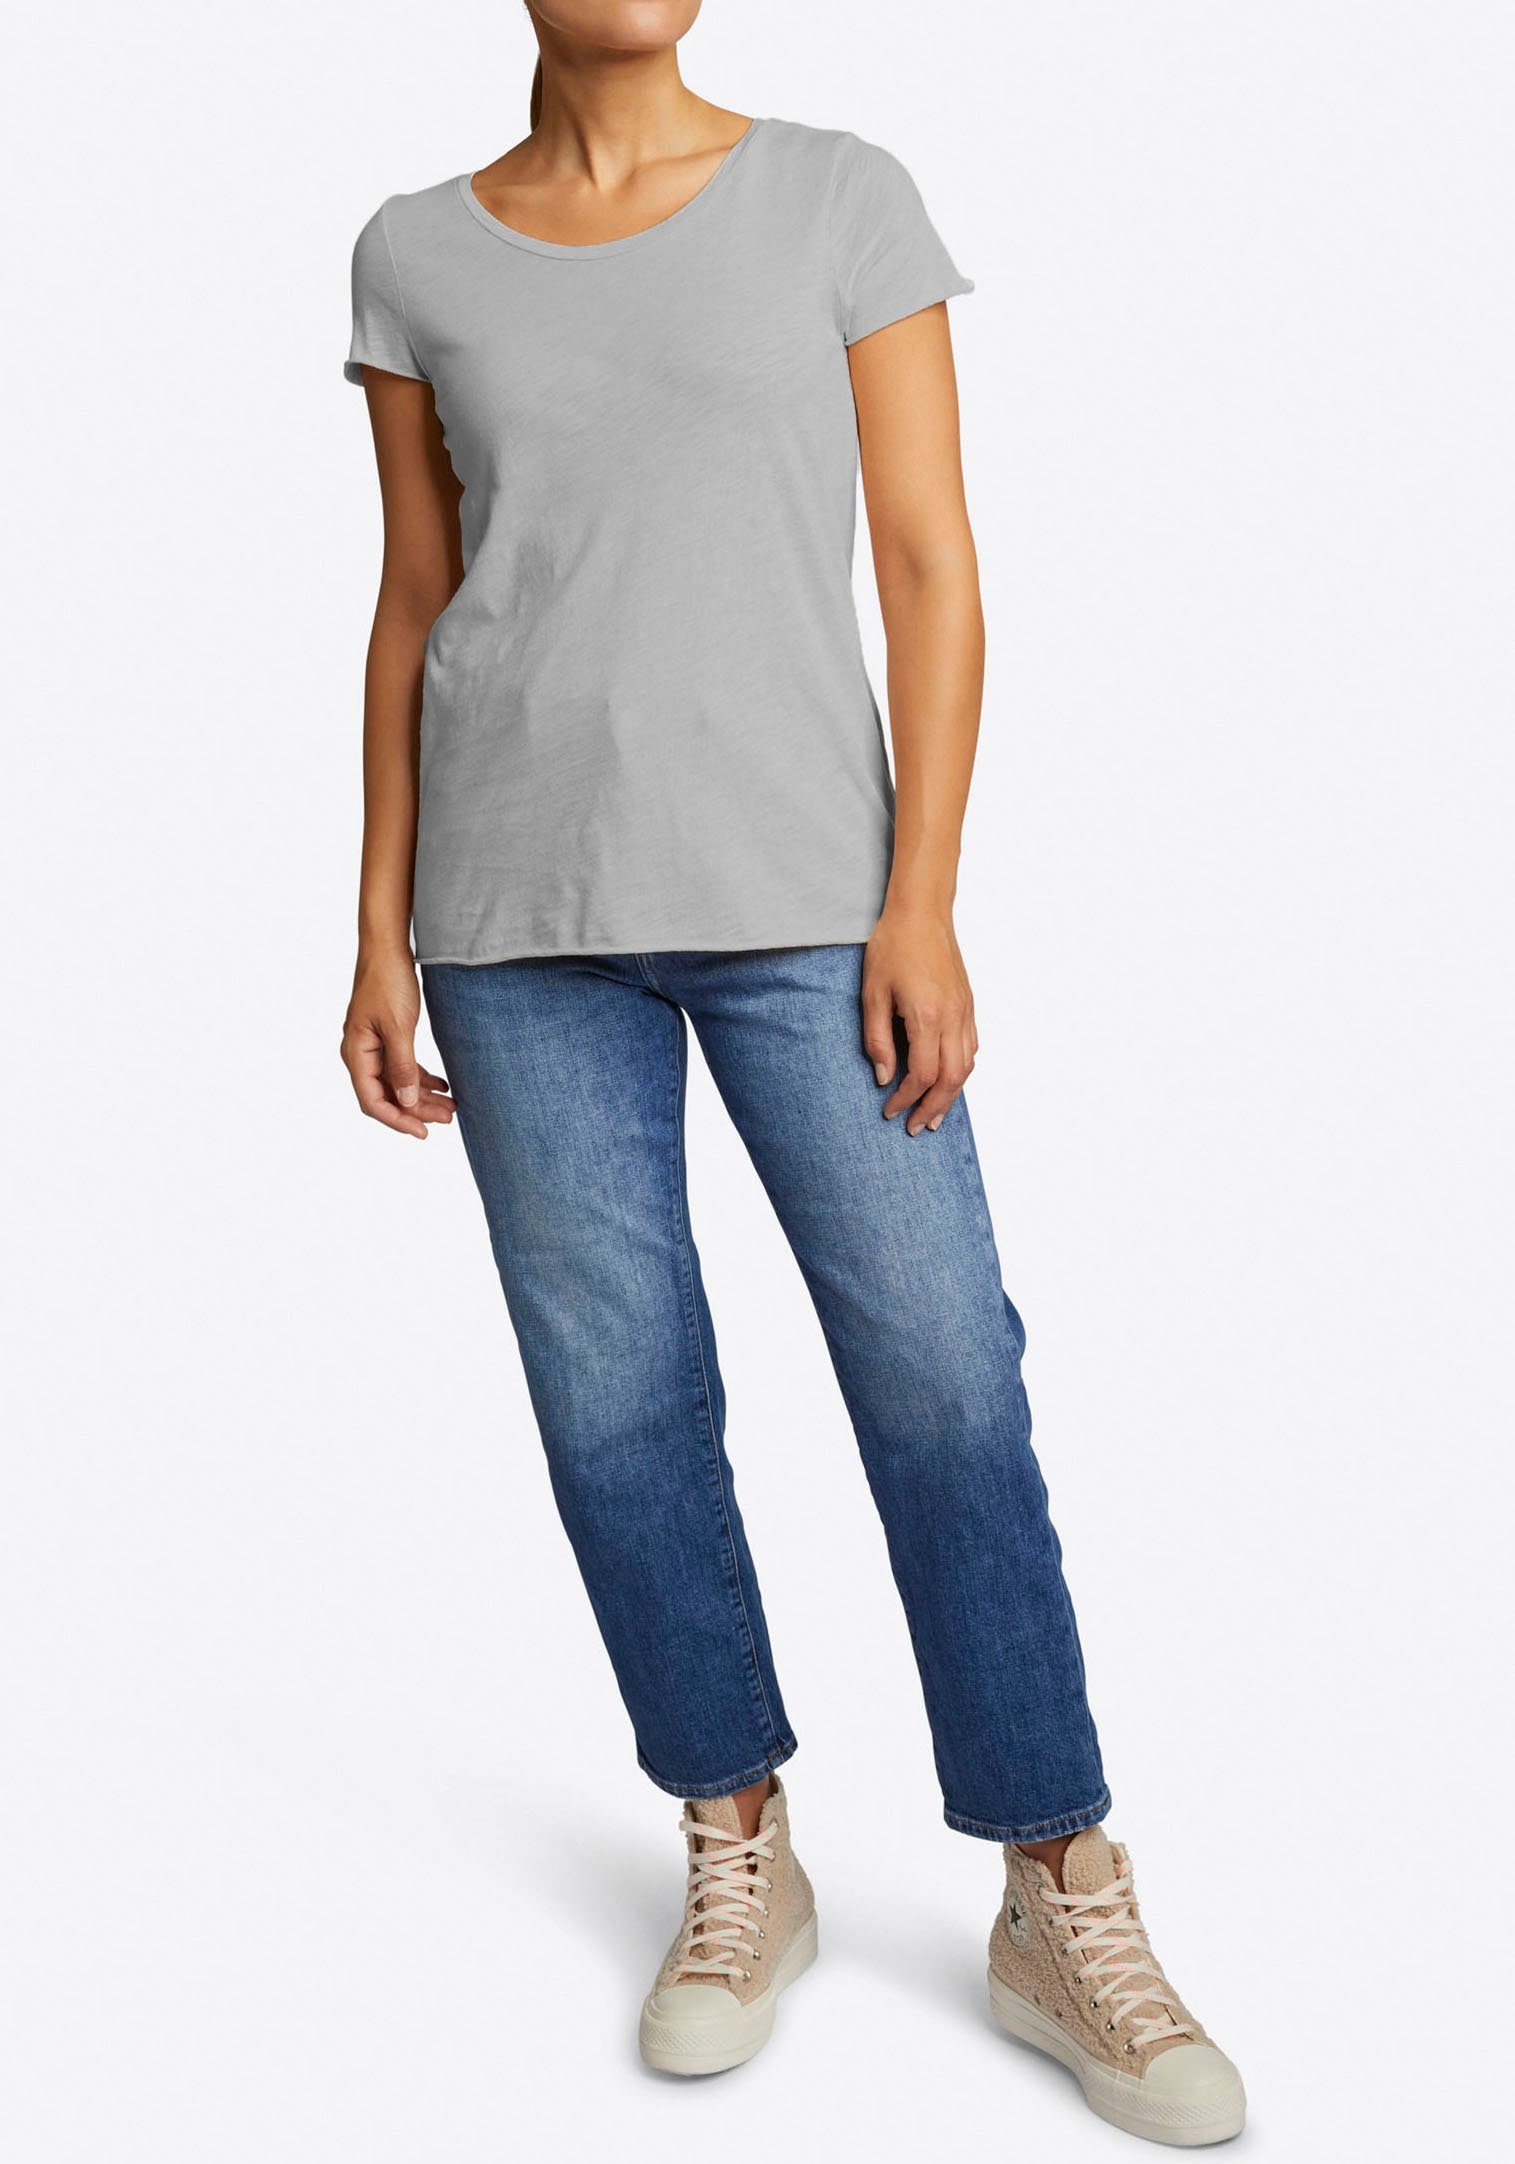 Basic-Form femininer grey & Rich T-Shirt melange Royal in